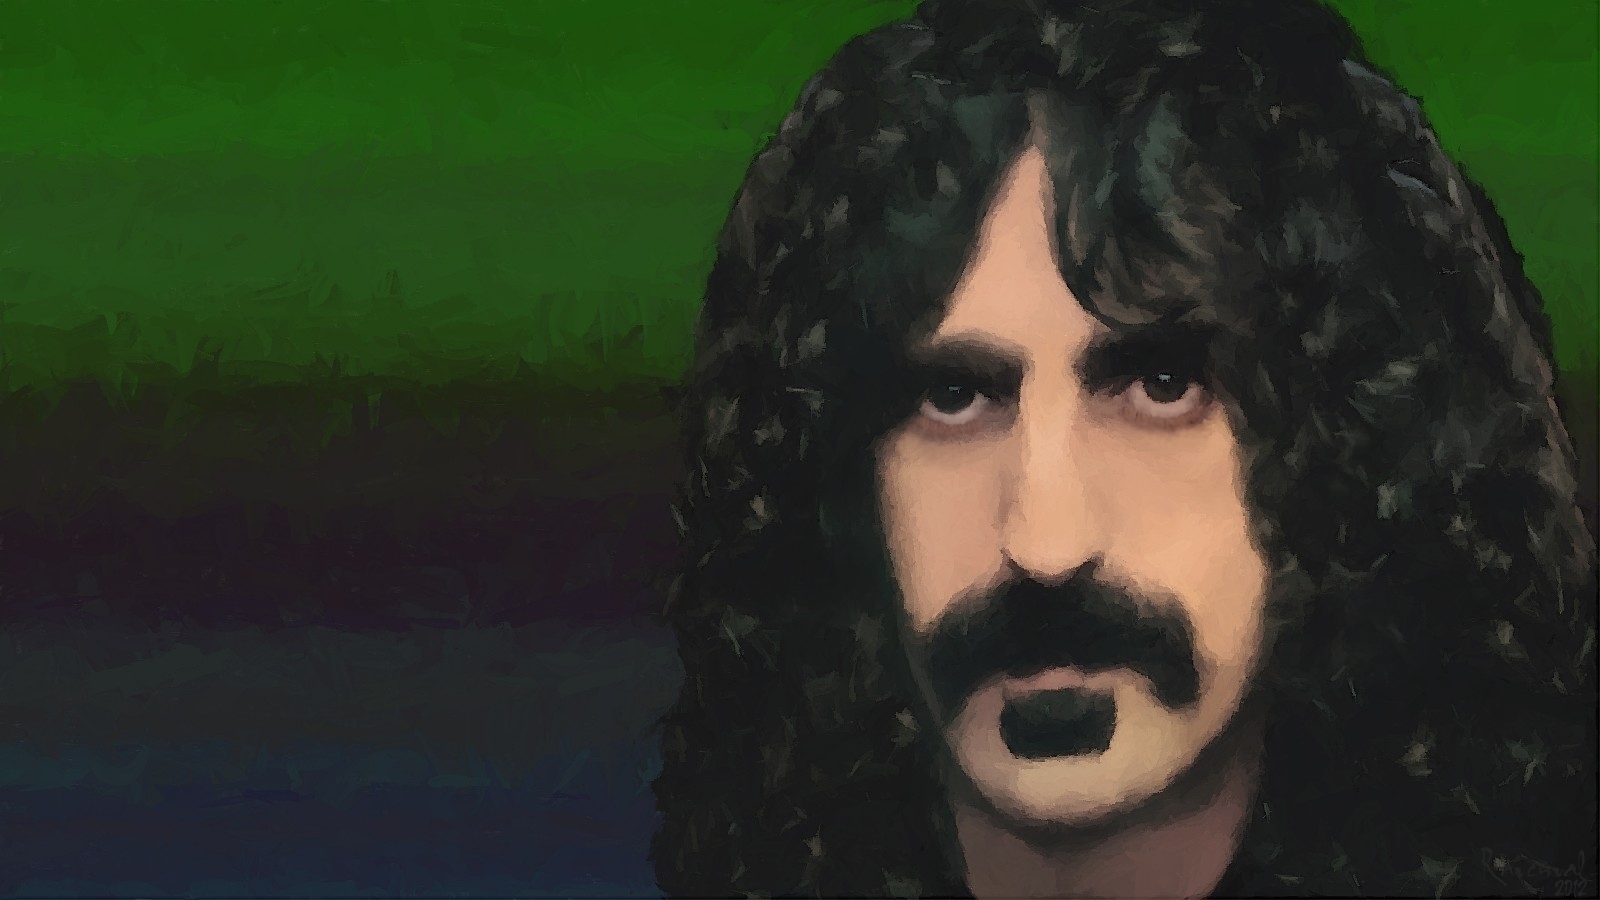 Frank Zappa wallpaper 1600x900 62506